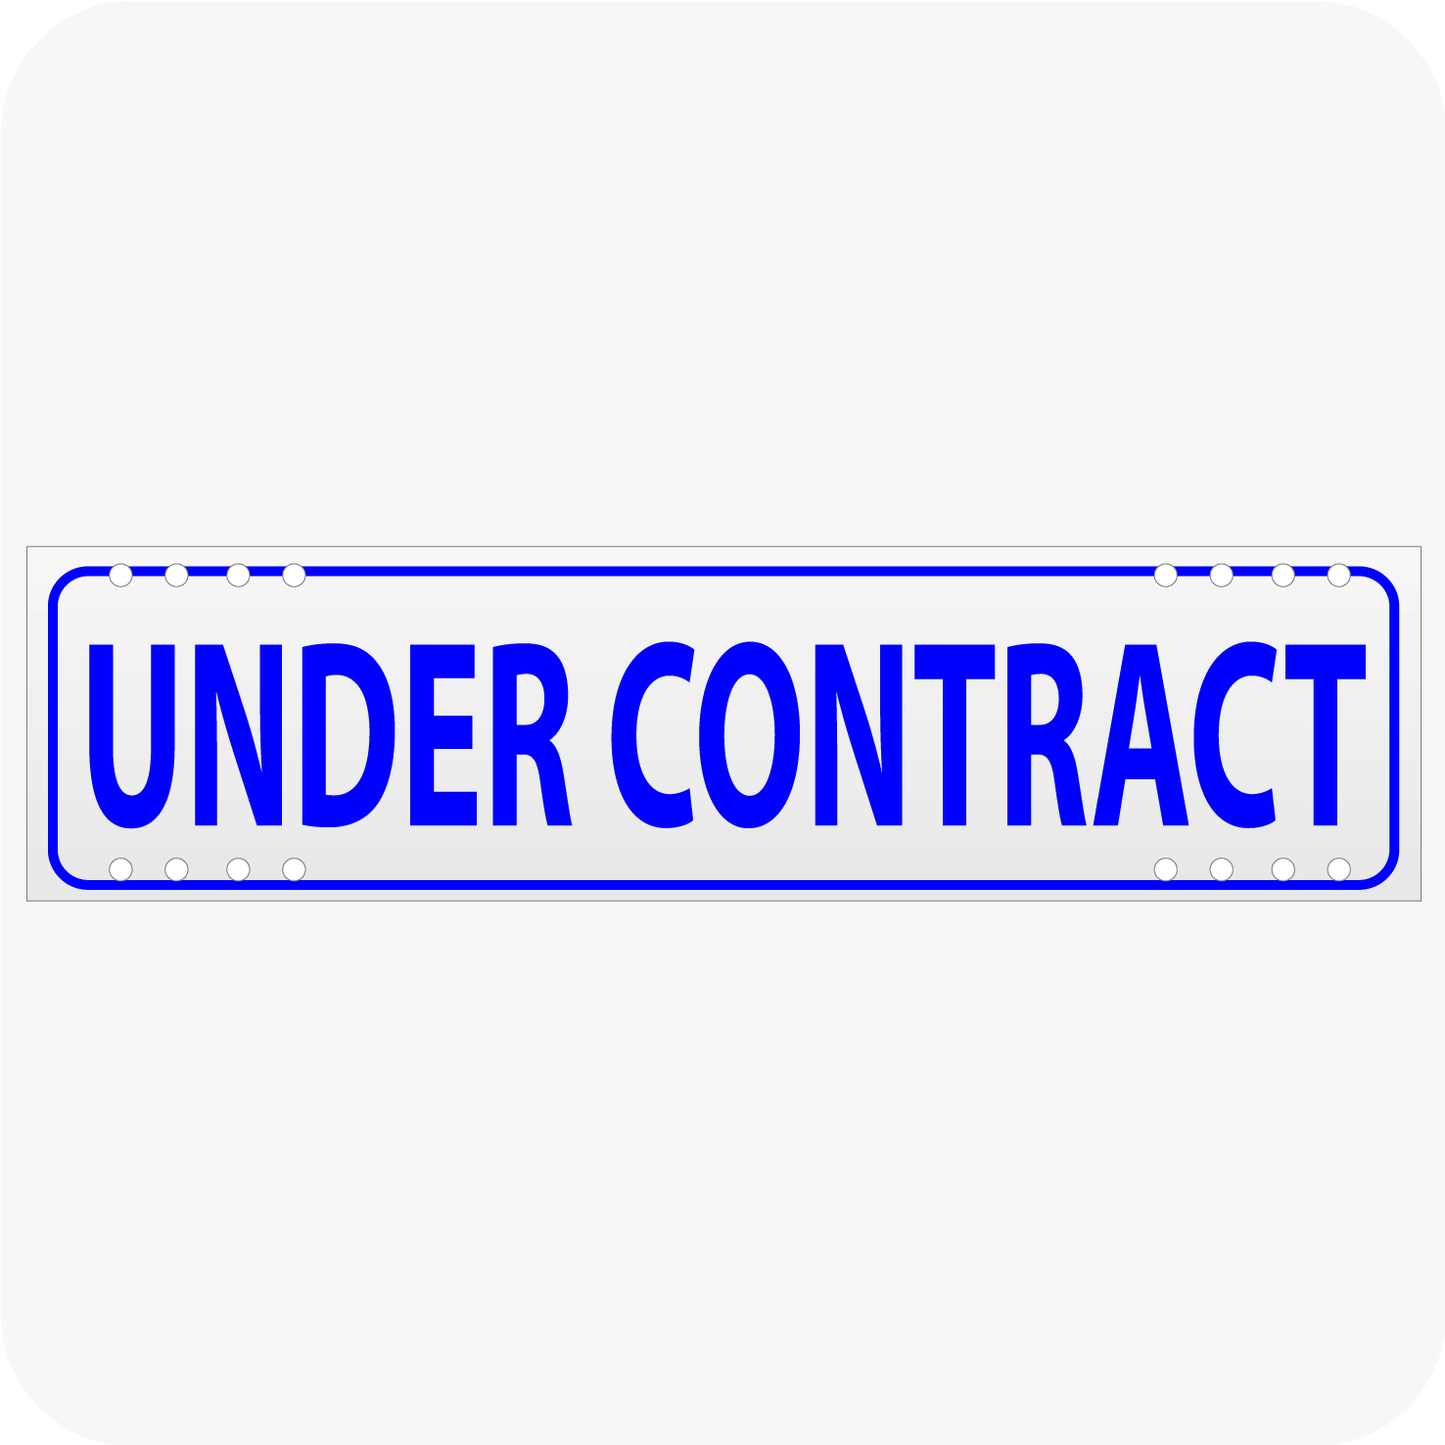 Under Contract 6 x 24 Corrugated Rider - Blue